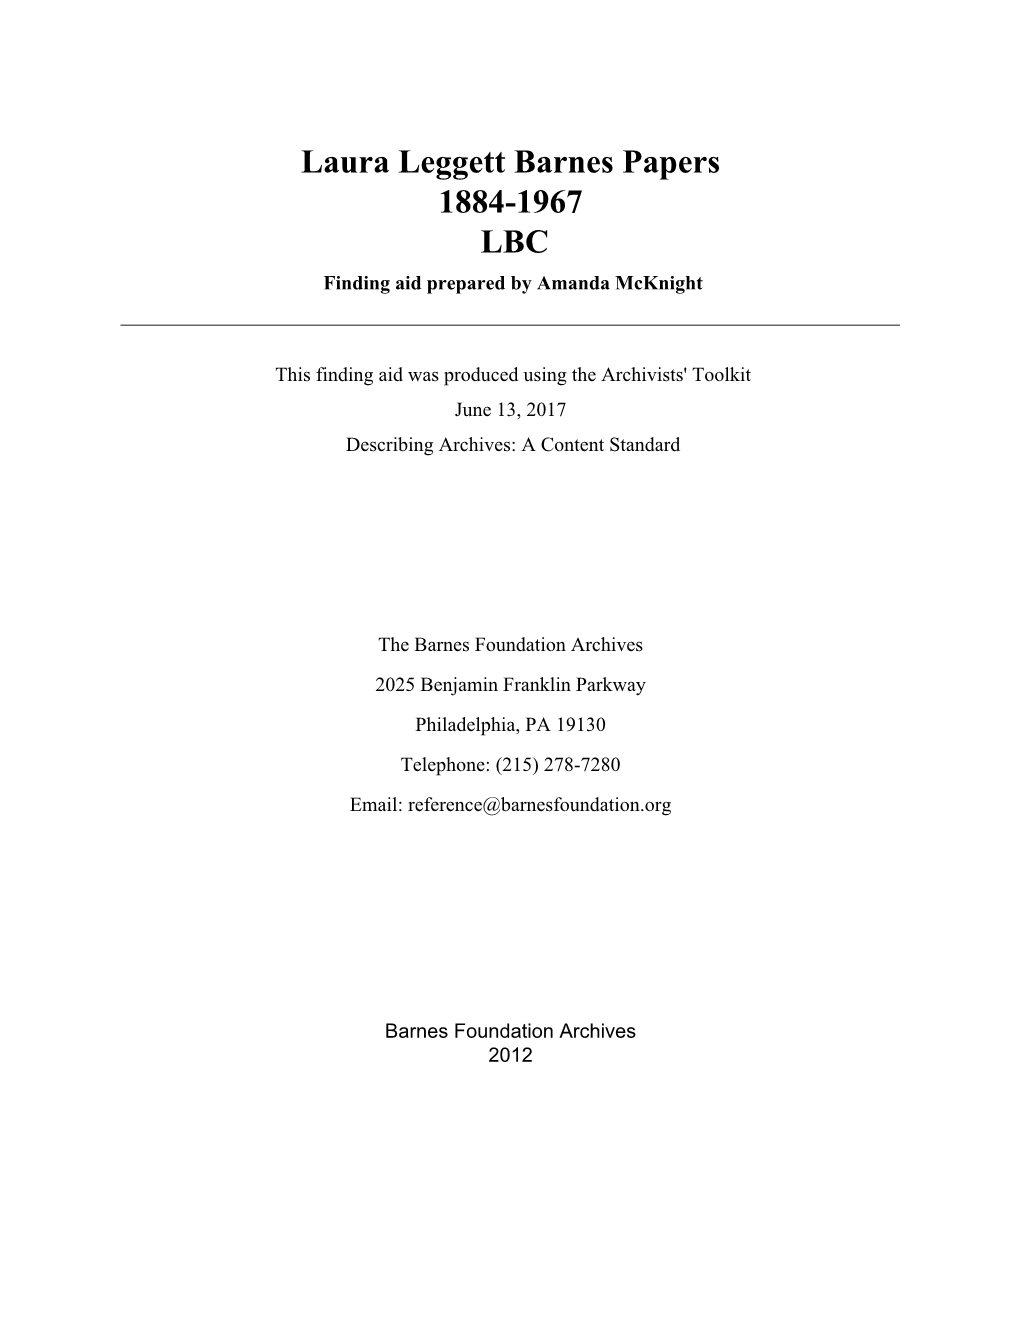 Laura Leggett Barnes Papers 1884-1967 LBC Finding Aid Prepared by Amanda Mcknight